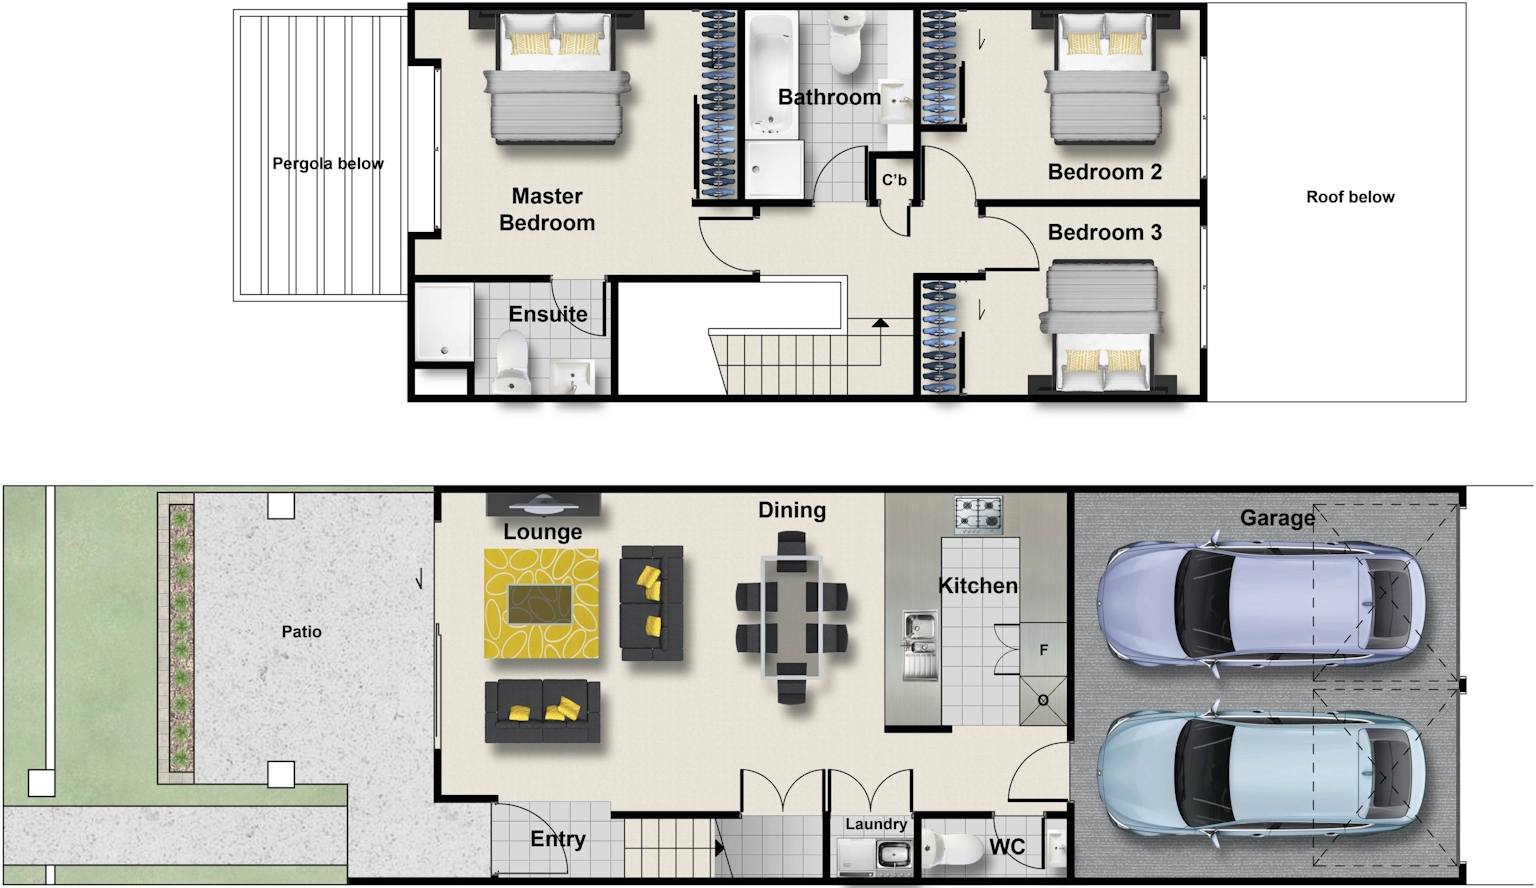 Lot 276 Addison Estate, Takanini floor plan